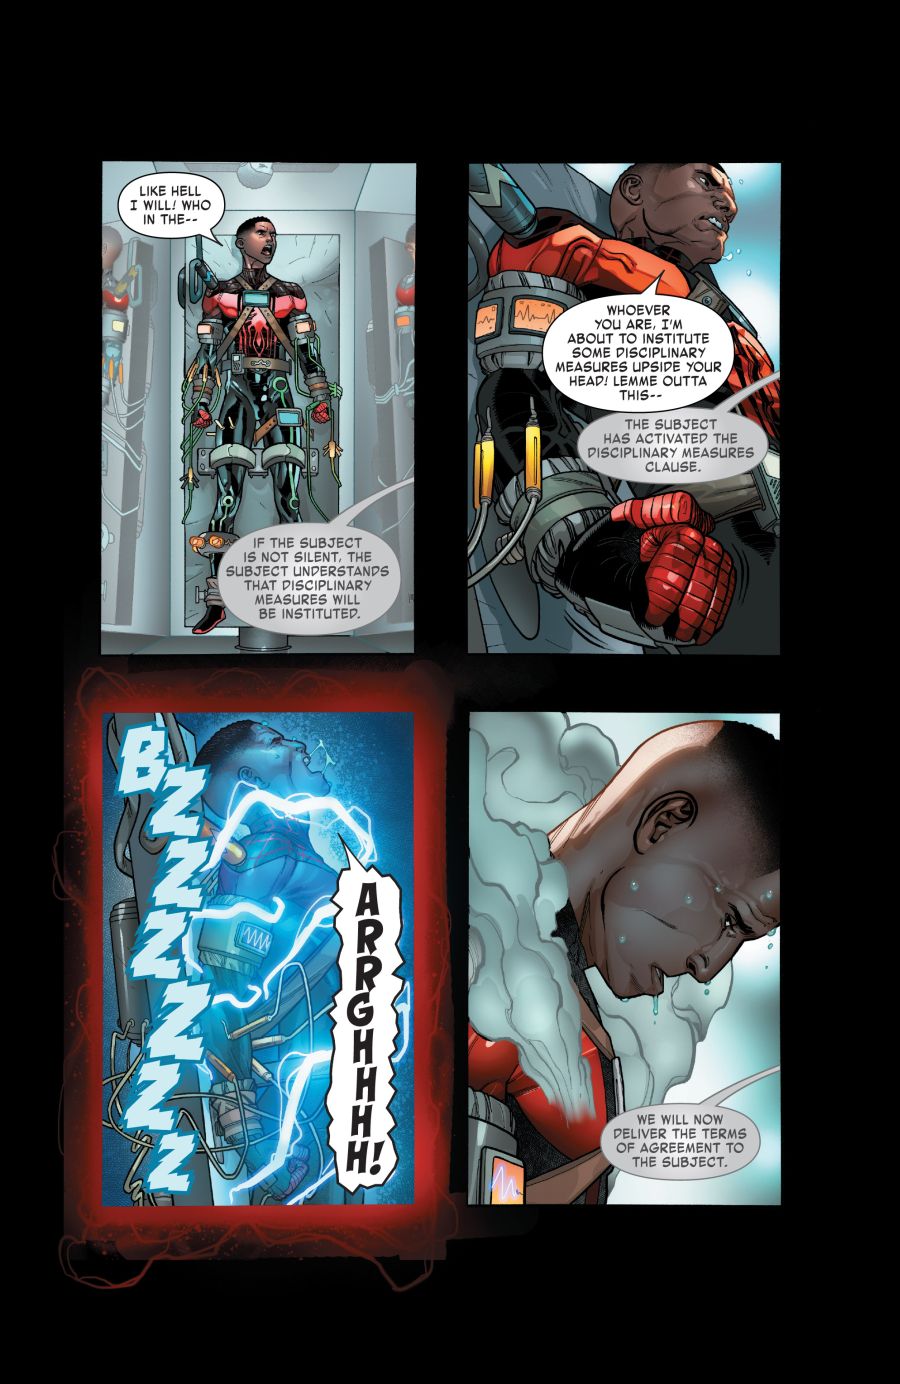 Miles Morales: Spider-Man #8